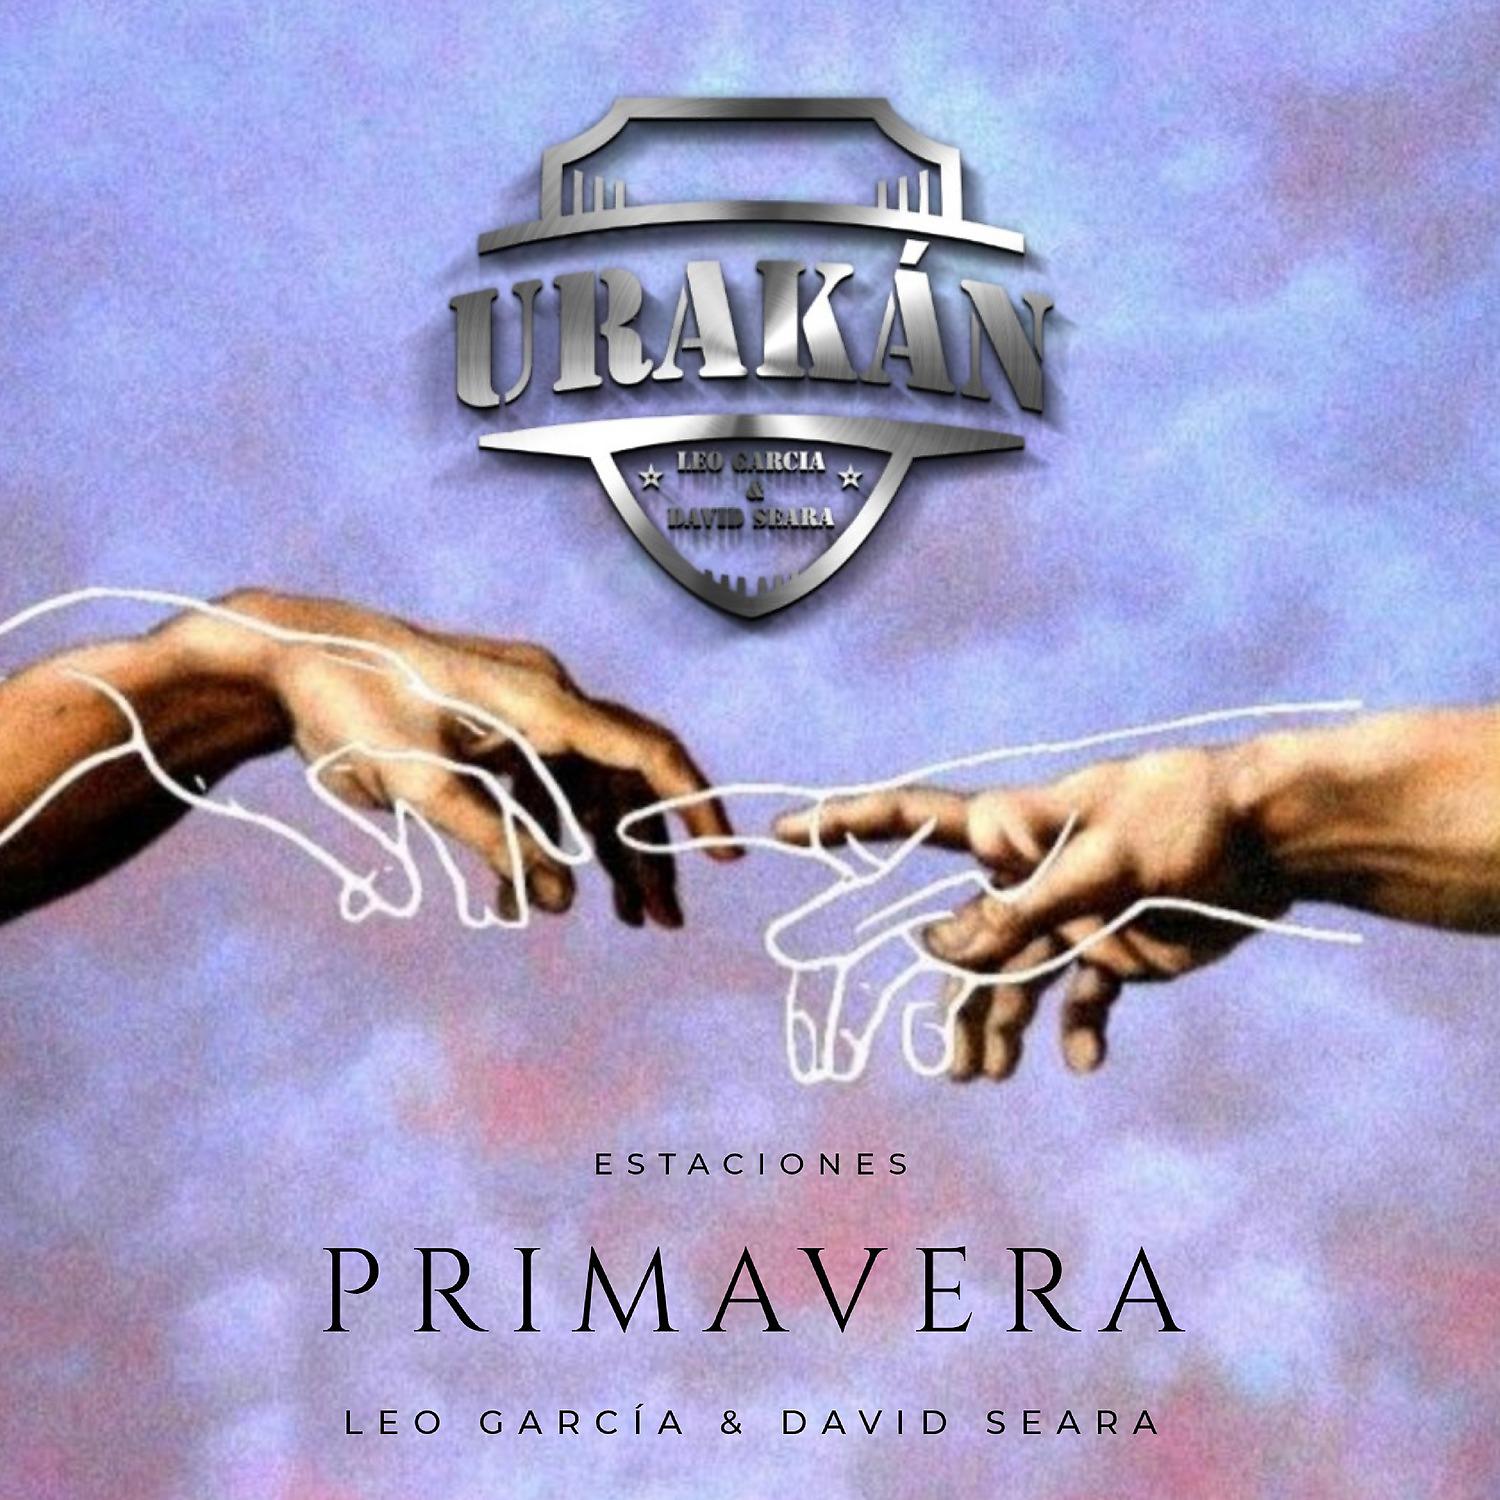 Постер альбома Primavera Urakán